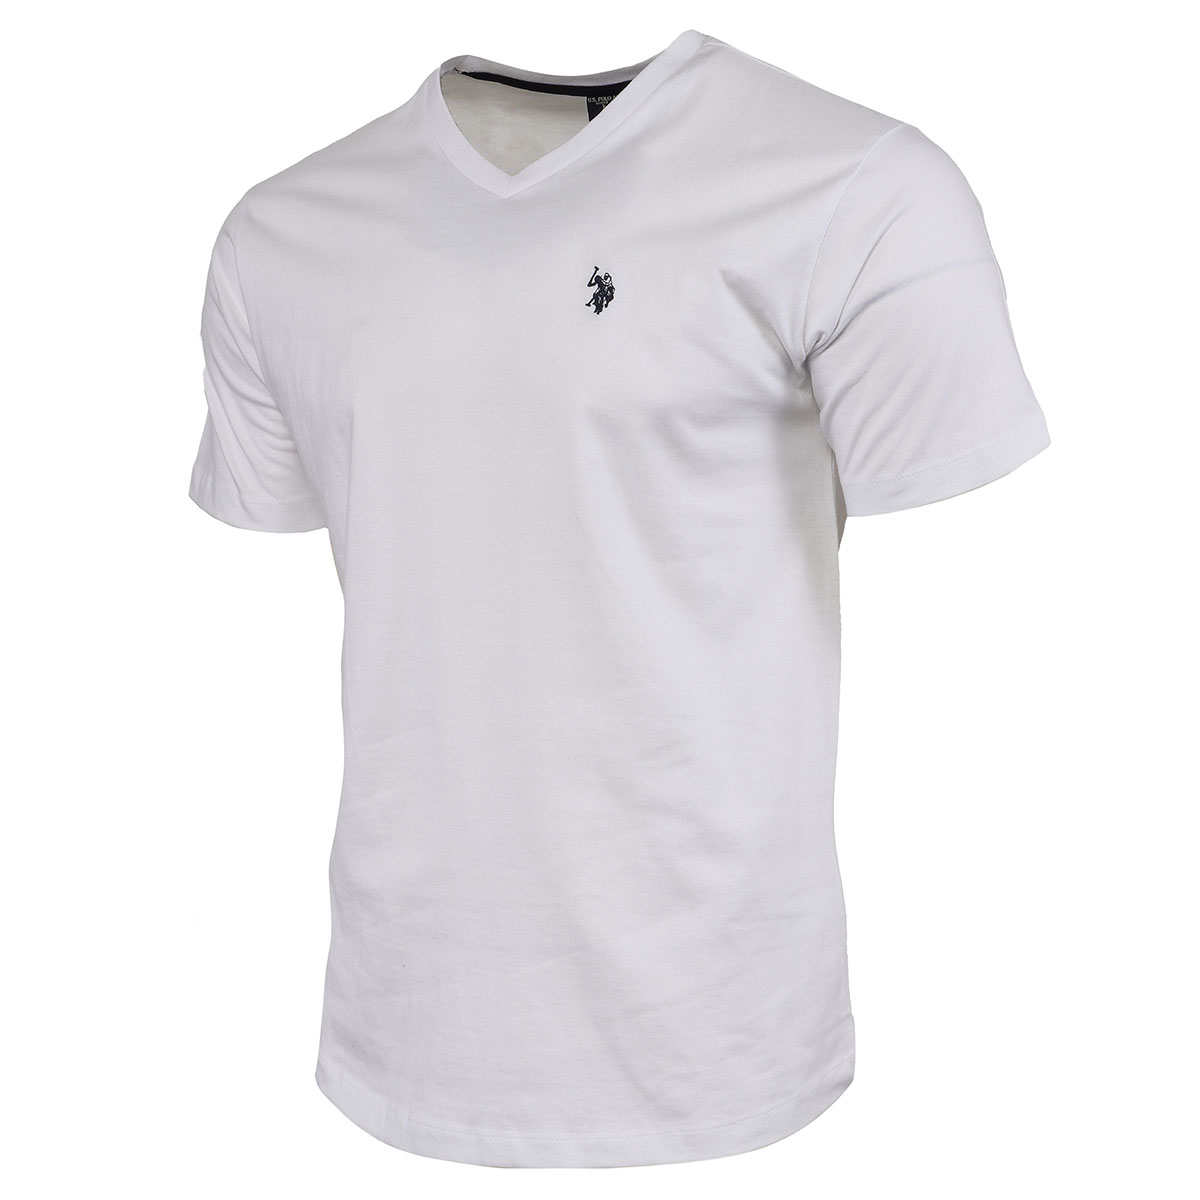 U.S. Polo Assn. Men's V-Neck T-Shirt - image 2 of 3